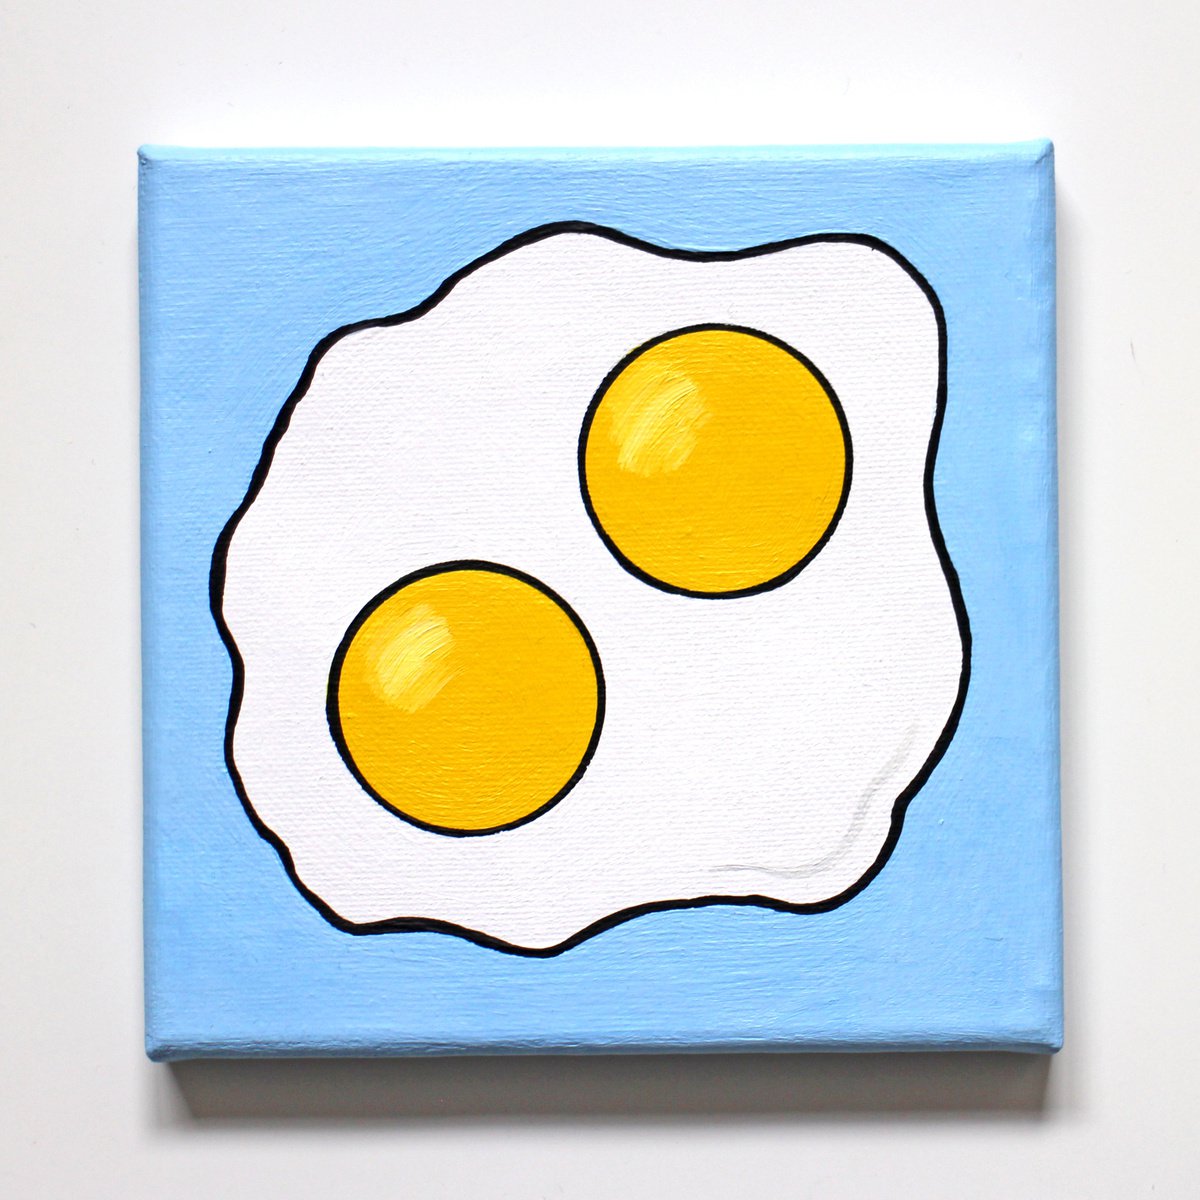 Fried Egg Double Yolk Pop Art Painting On Mini Canvas by Ian Viggars